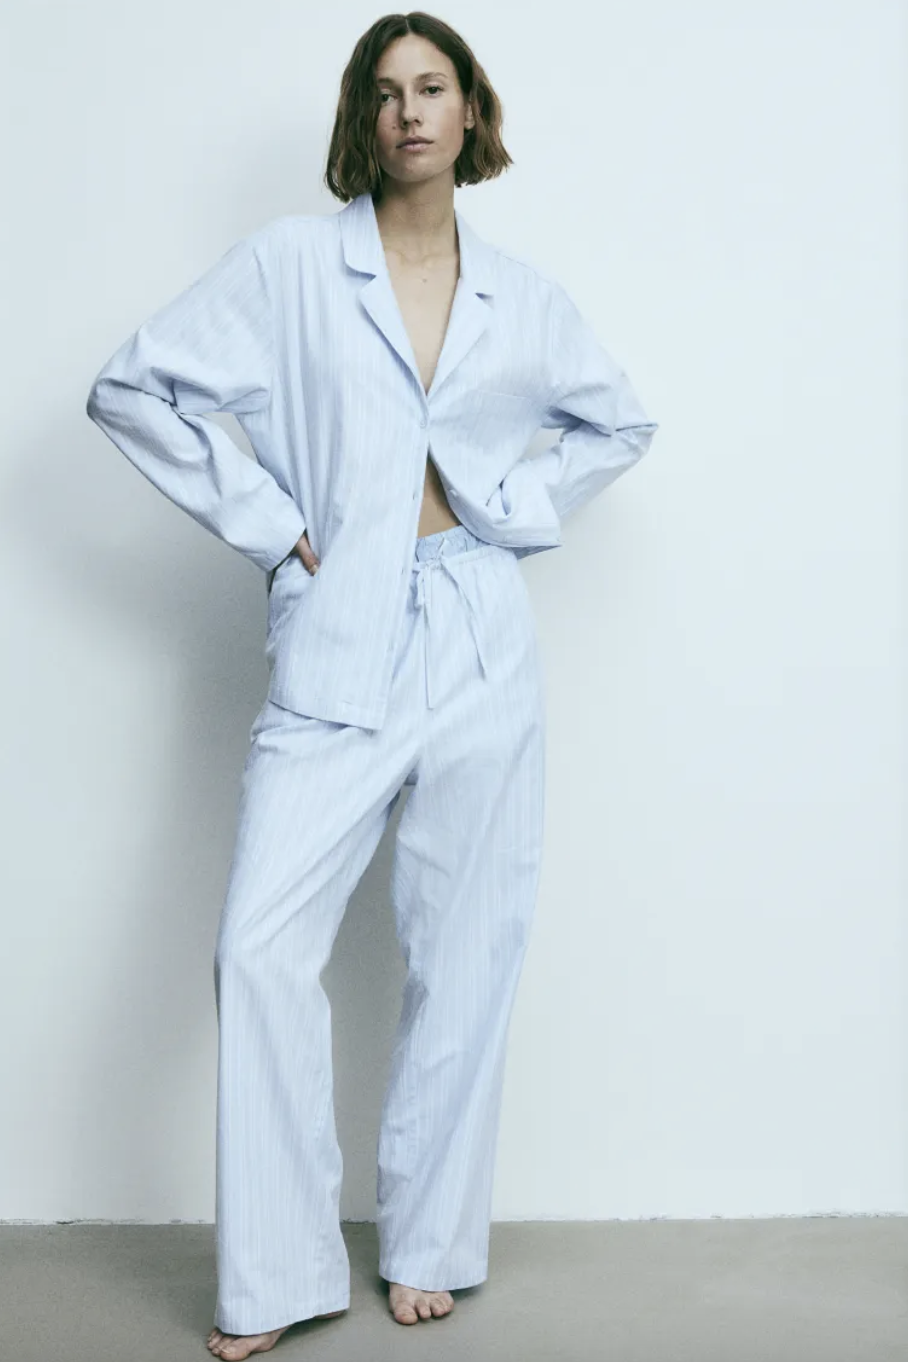 London Pyjama Top Dust Blue Silk